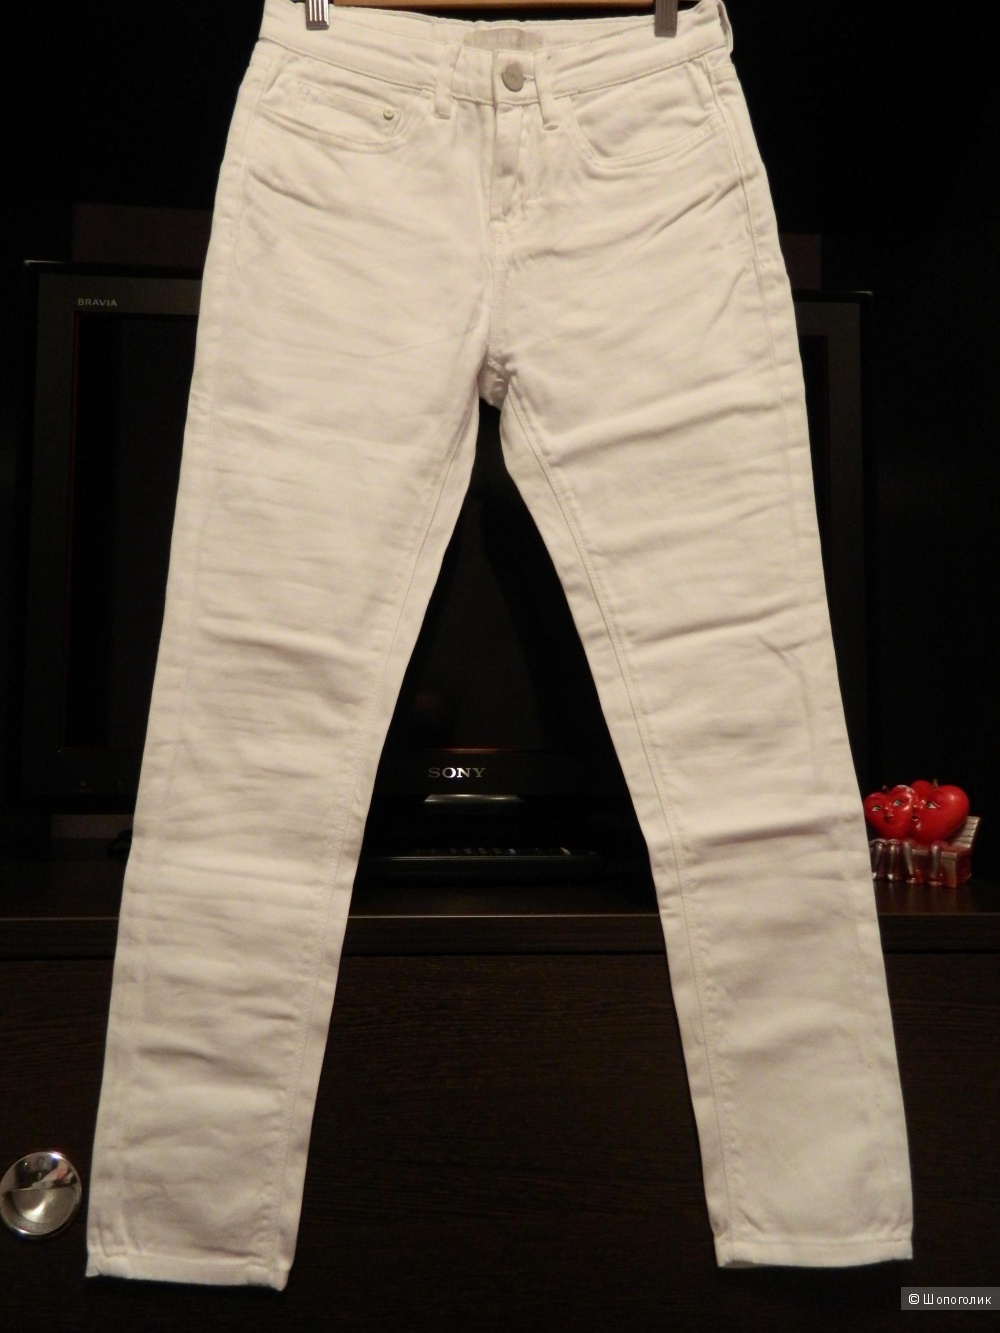 Waven Petite Freya Ankle Grazer Skinny Jeans - White / UK 8